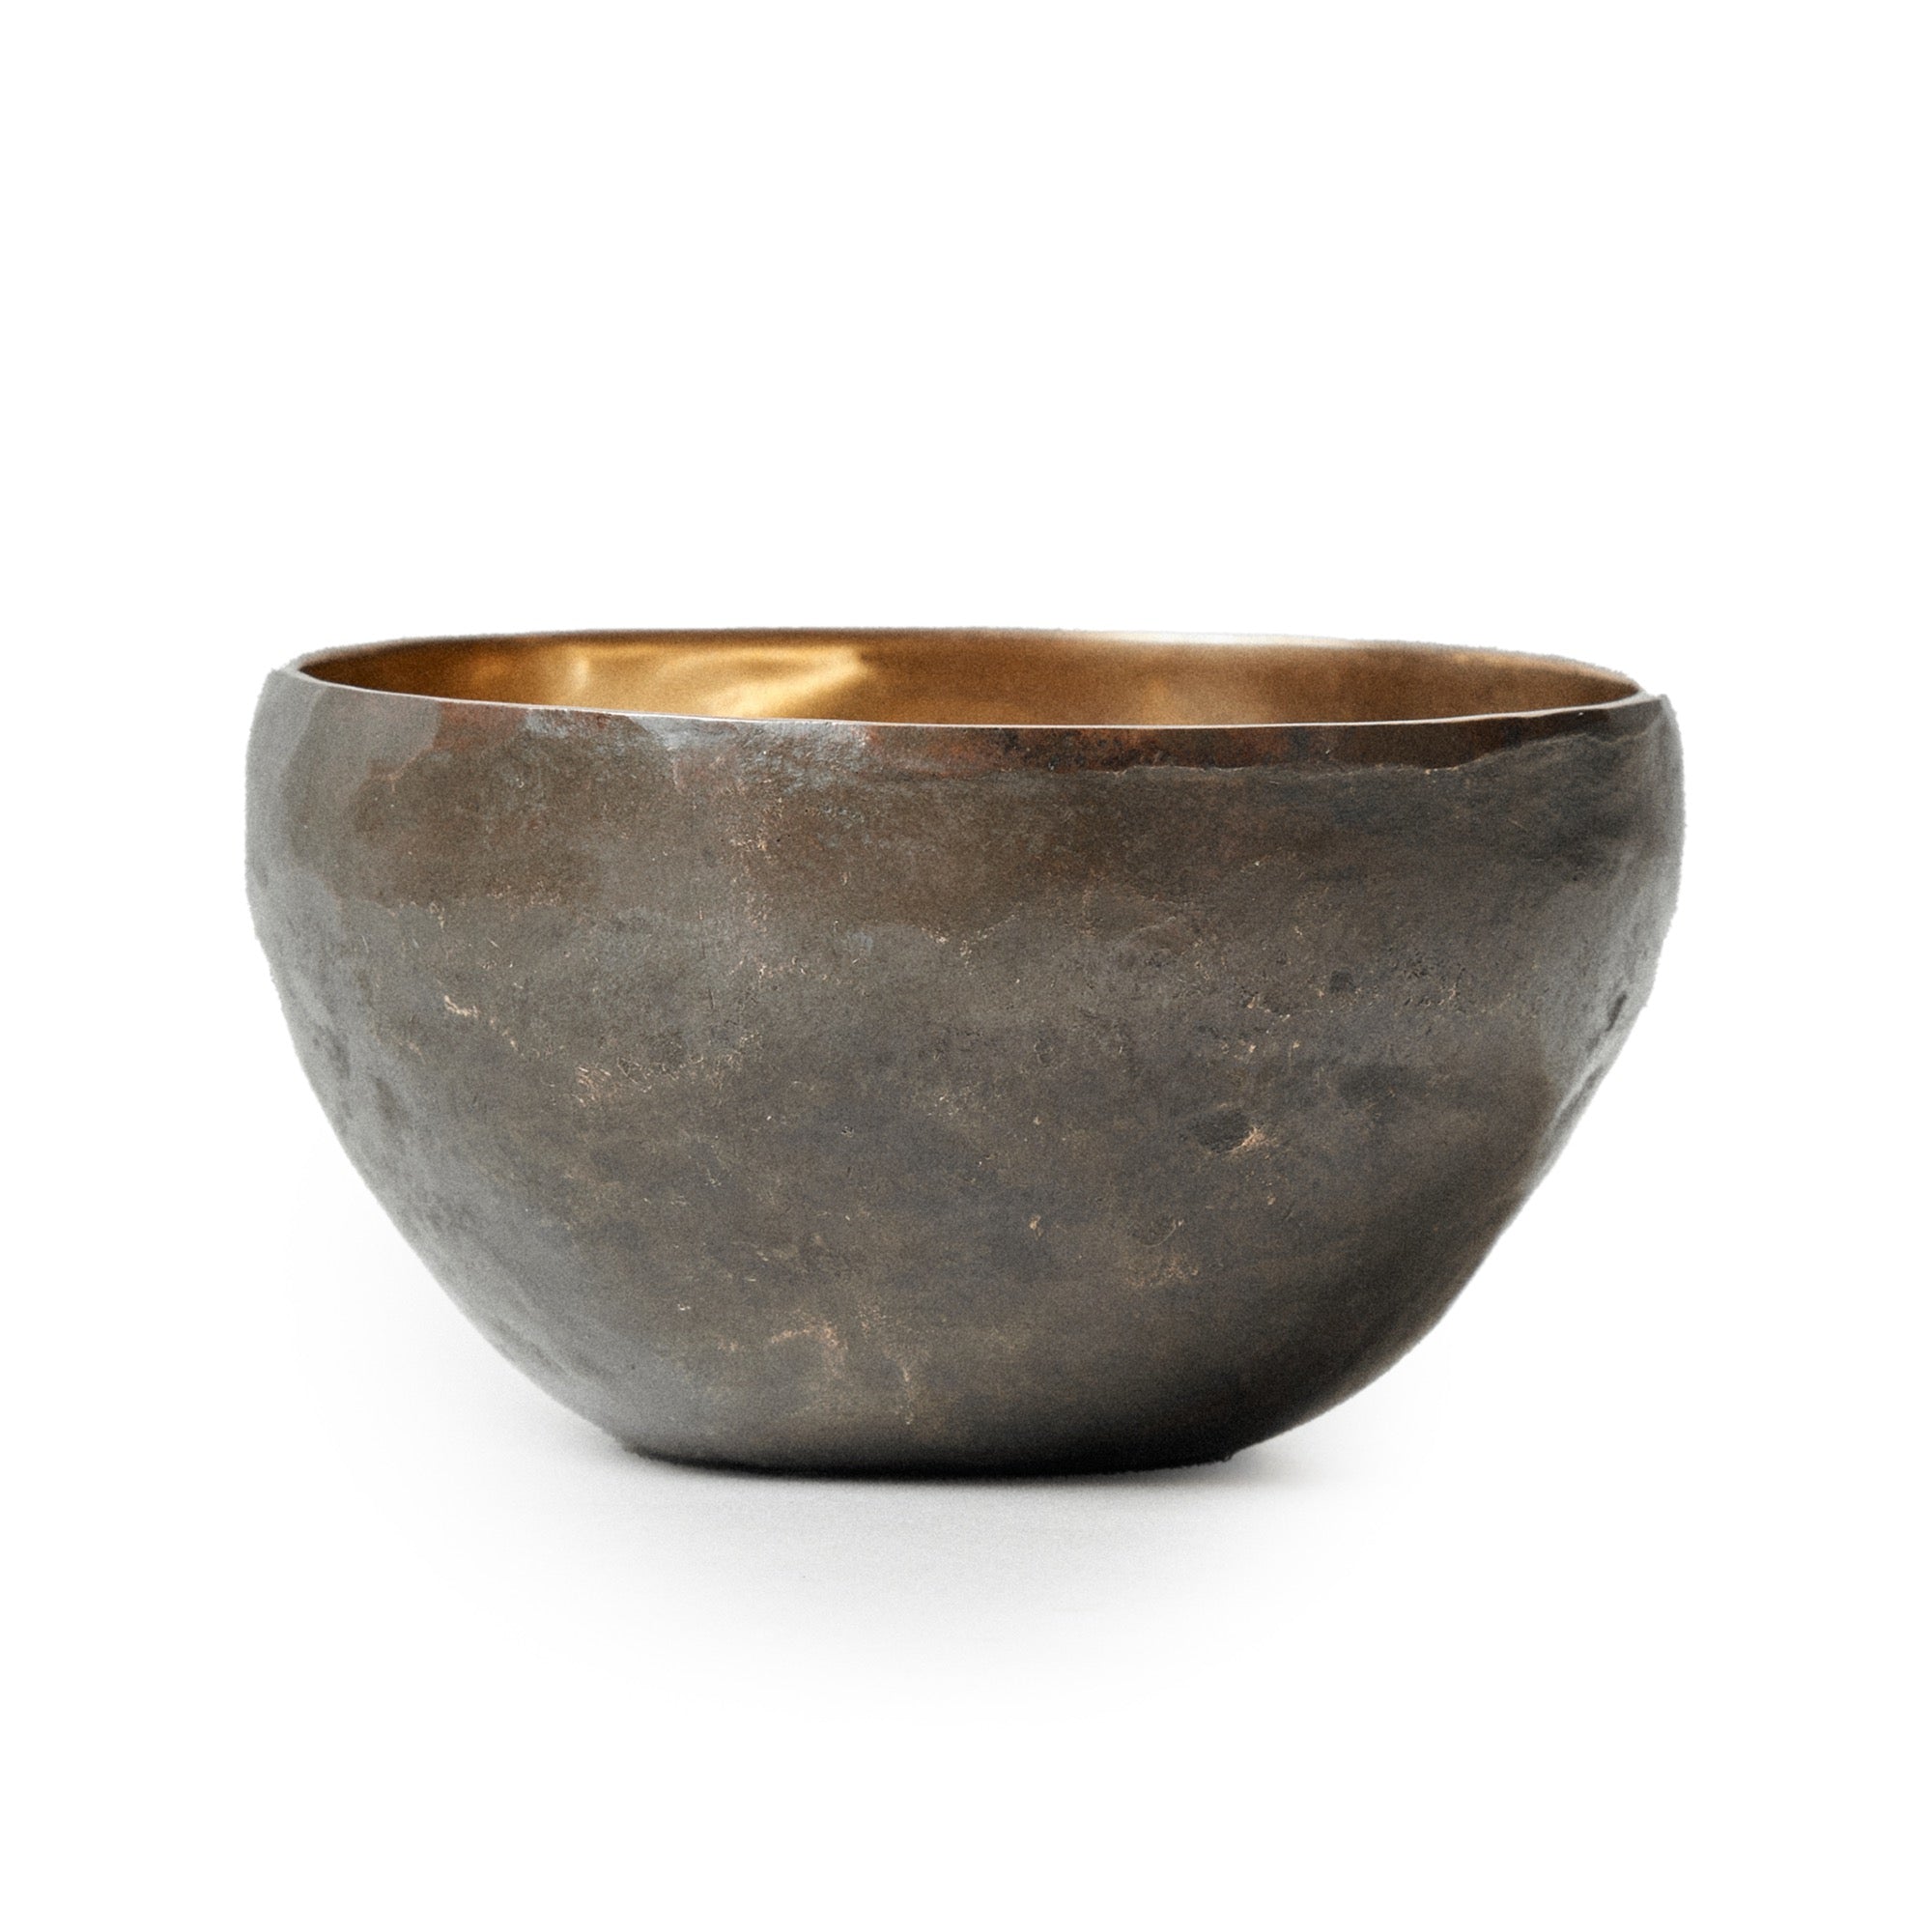 Hammered Brass Bowl